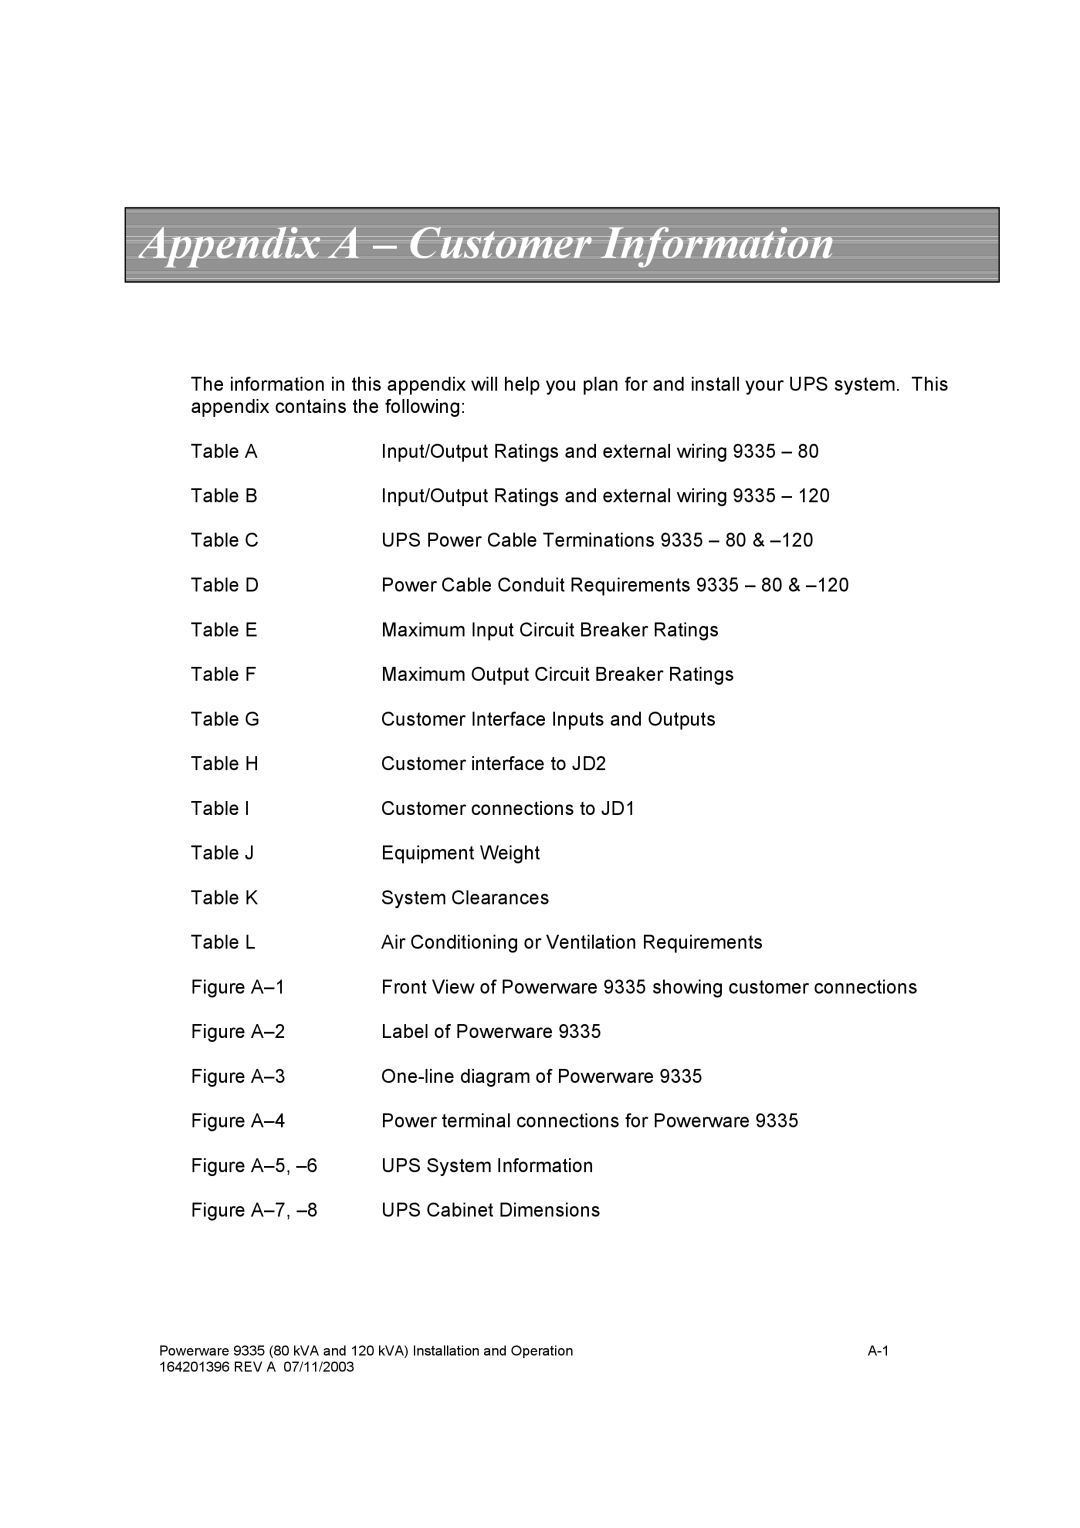 Powerware 9335 operation manual Appendix a Customer Information 